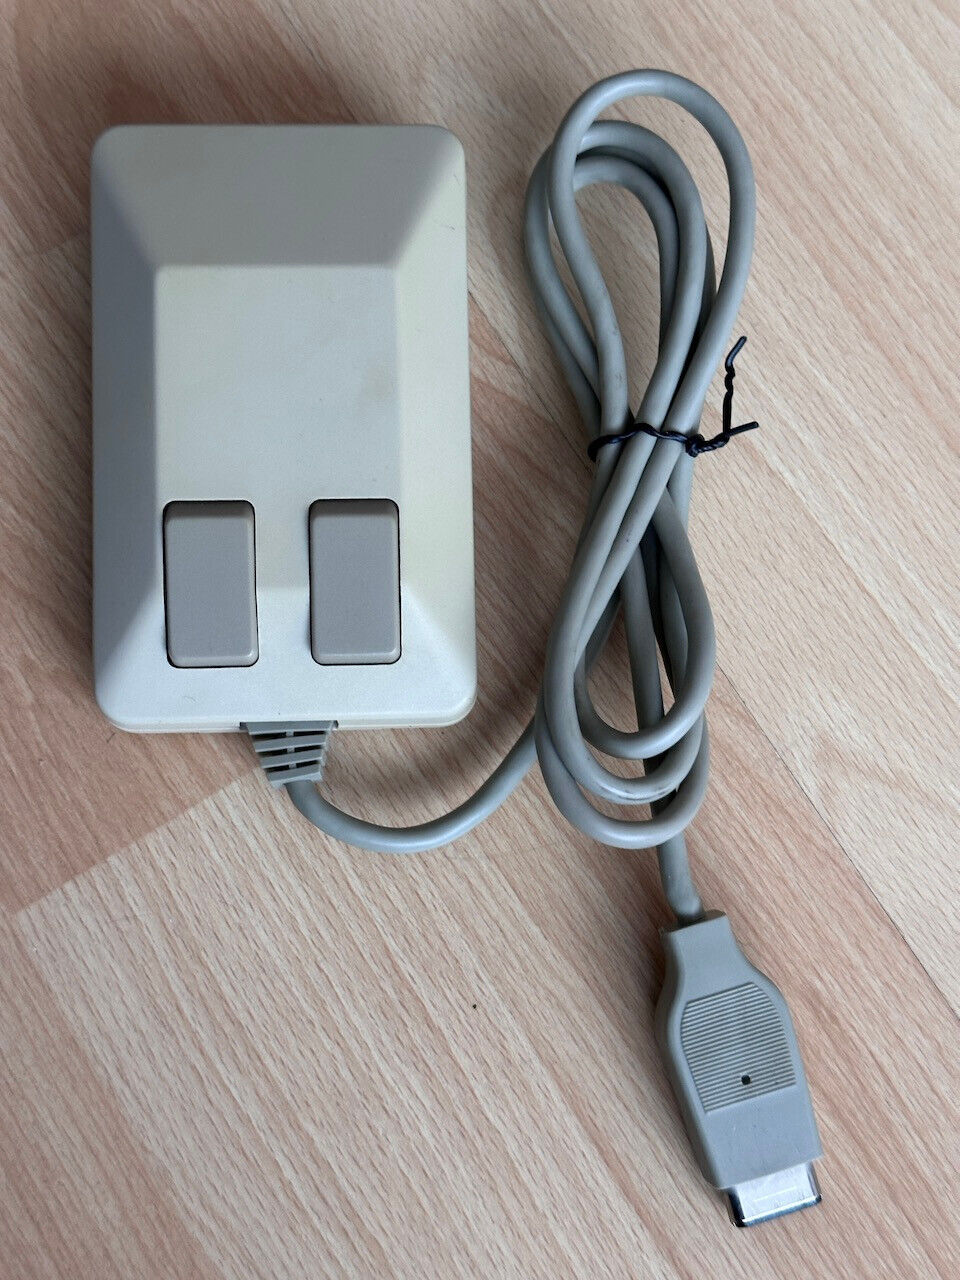 Commodore - Amiga / Mouse / Mouse, Used #13 24